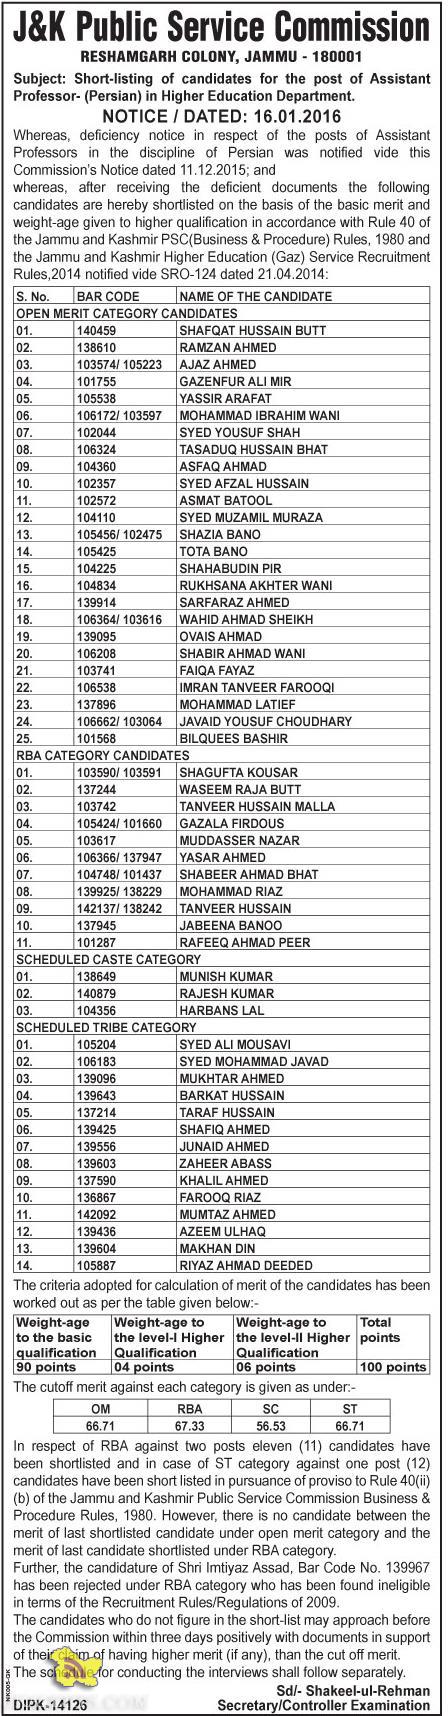 JKSSB Short Listing of candidatesof Assistant Professor- (Persian) in Higher Education Department.